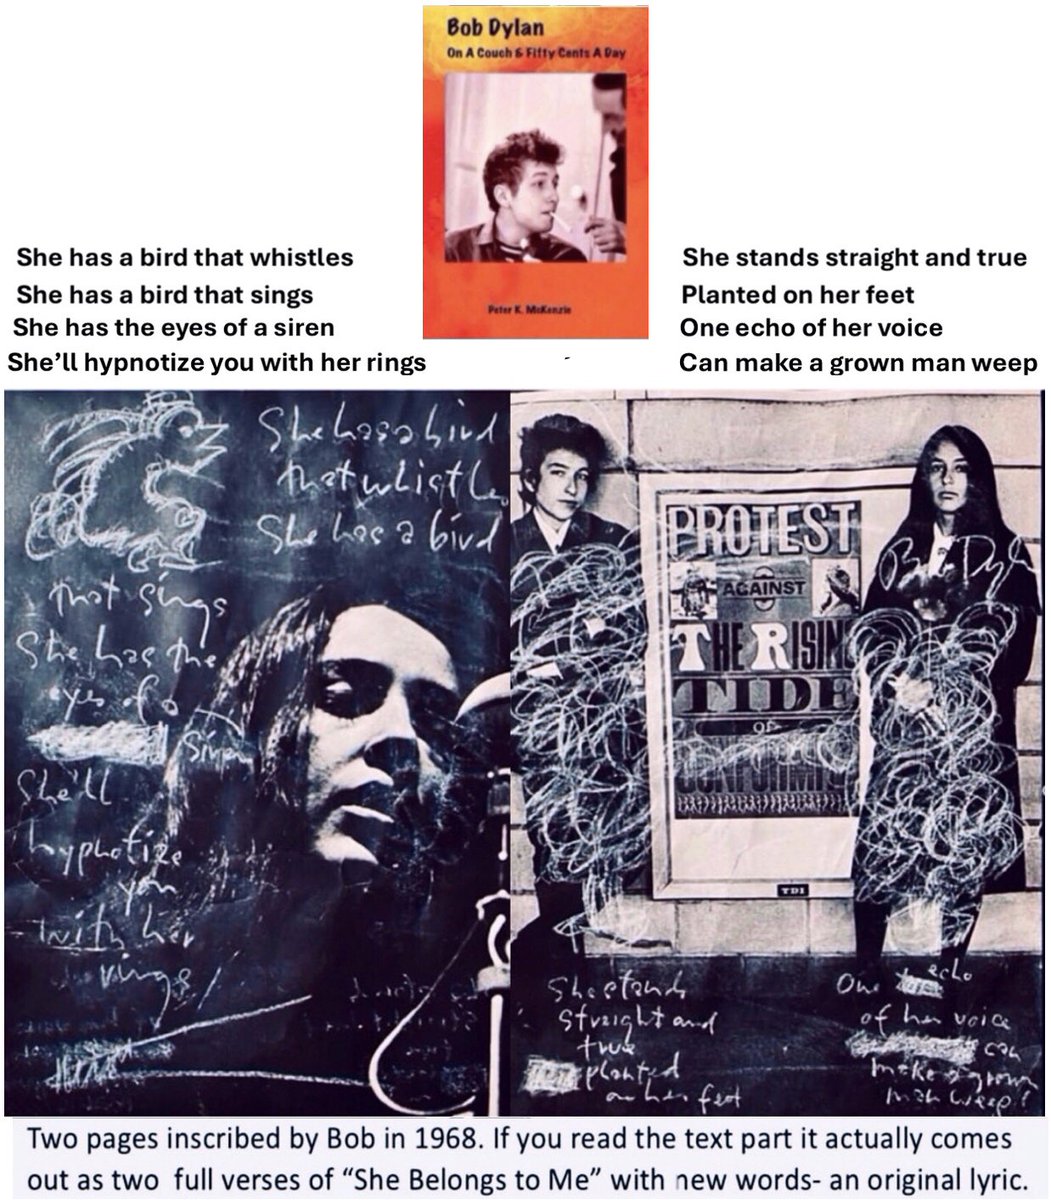 MY BOOK  
Click here for full description:amazon.com/dp/B09BDXC2VR

#BobDylan #Dylan #@goodreads #DylanRadio #music #folkmusic #poetry #newyorkcity  #greenwichvillage @RollingStone @harryhew #author #podcast @carolynhester13